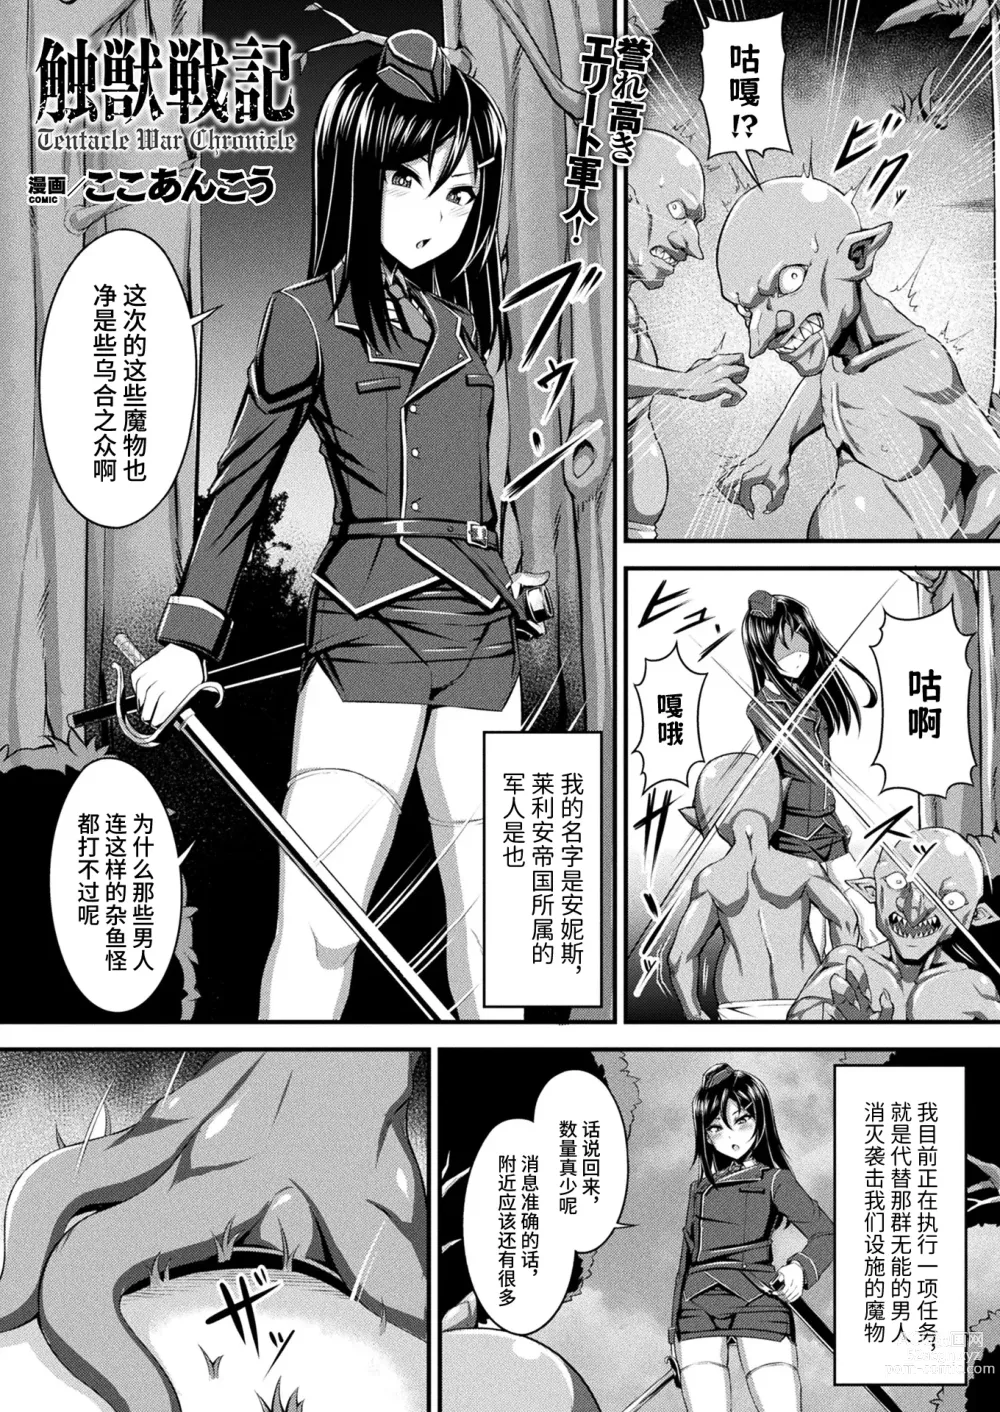 Page 2 of manga Fure Kemono Senki - Tentacle War Chronicle